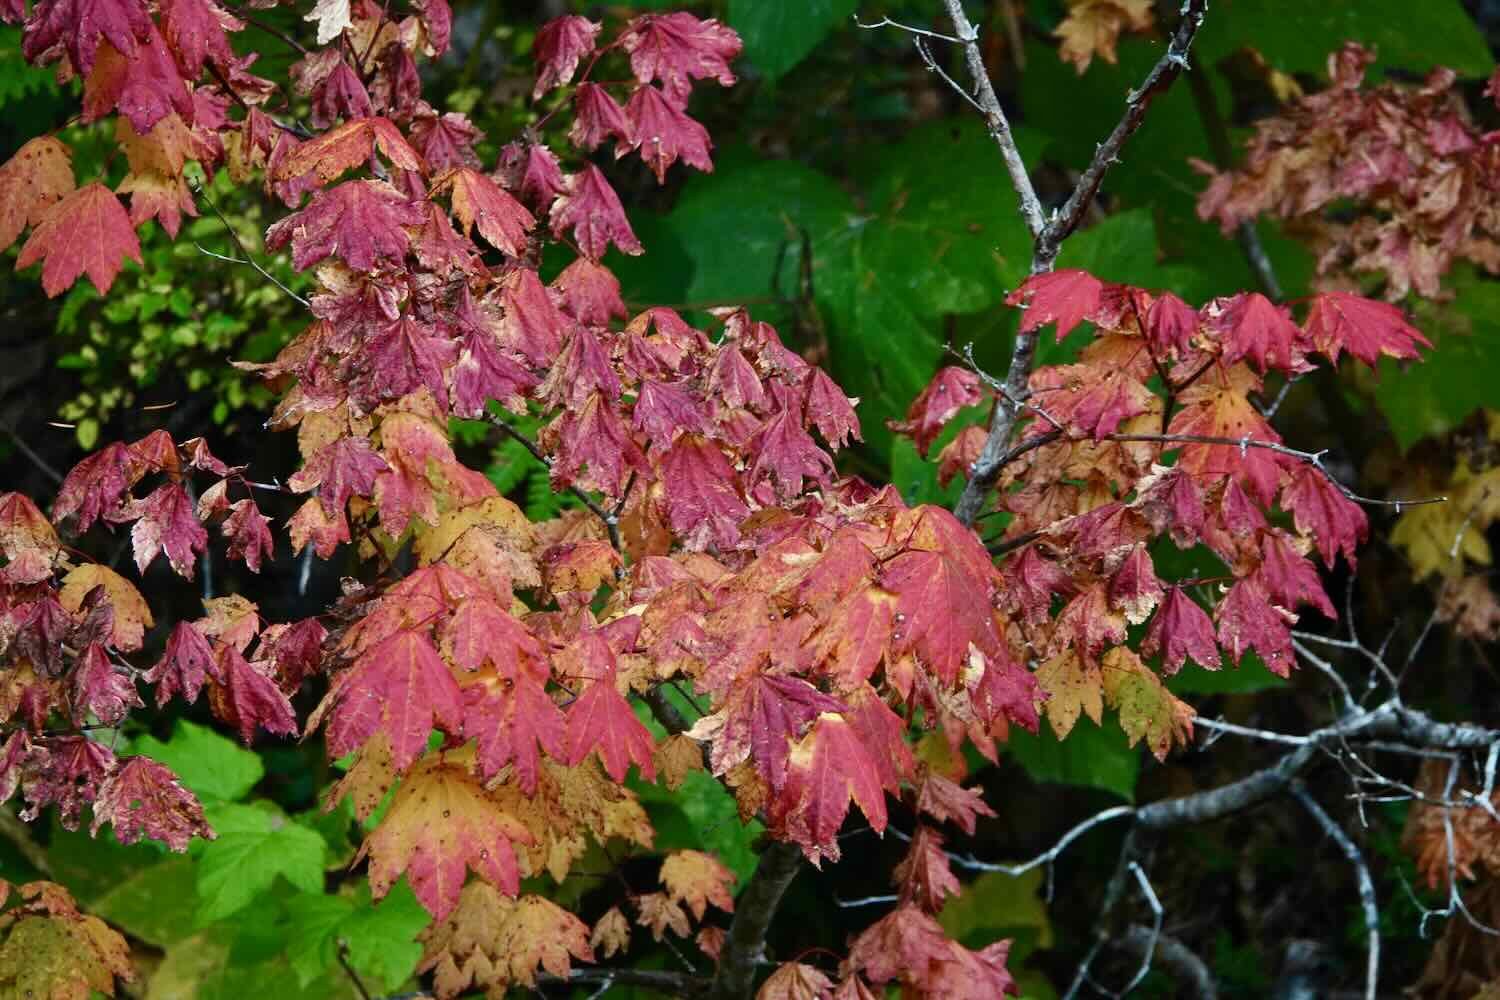 Vine maple leaves turning shades of purple, pink and orange